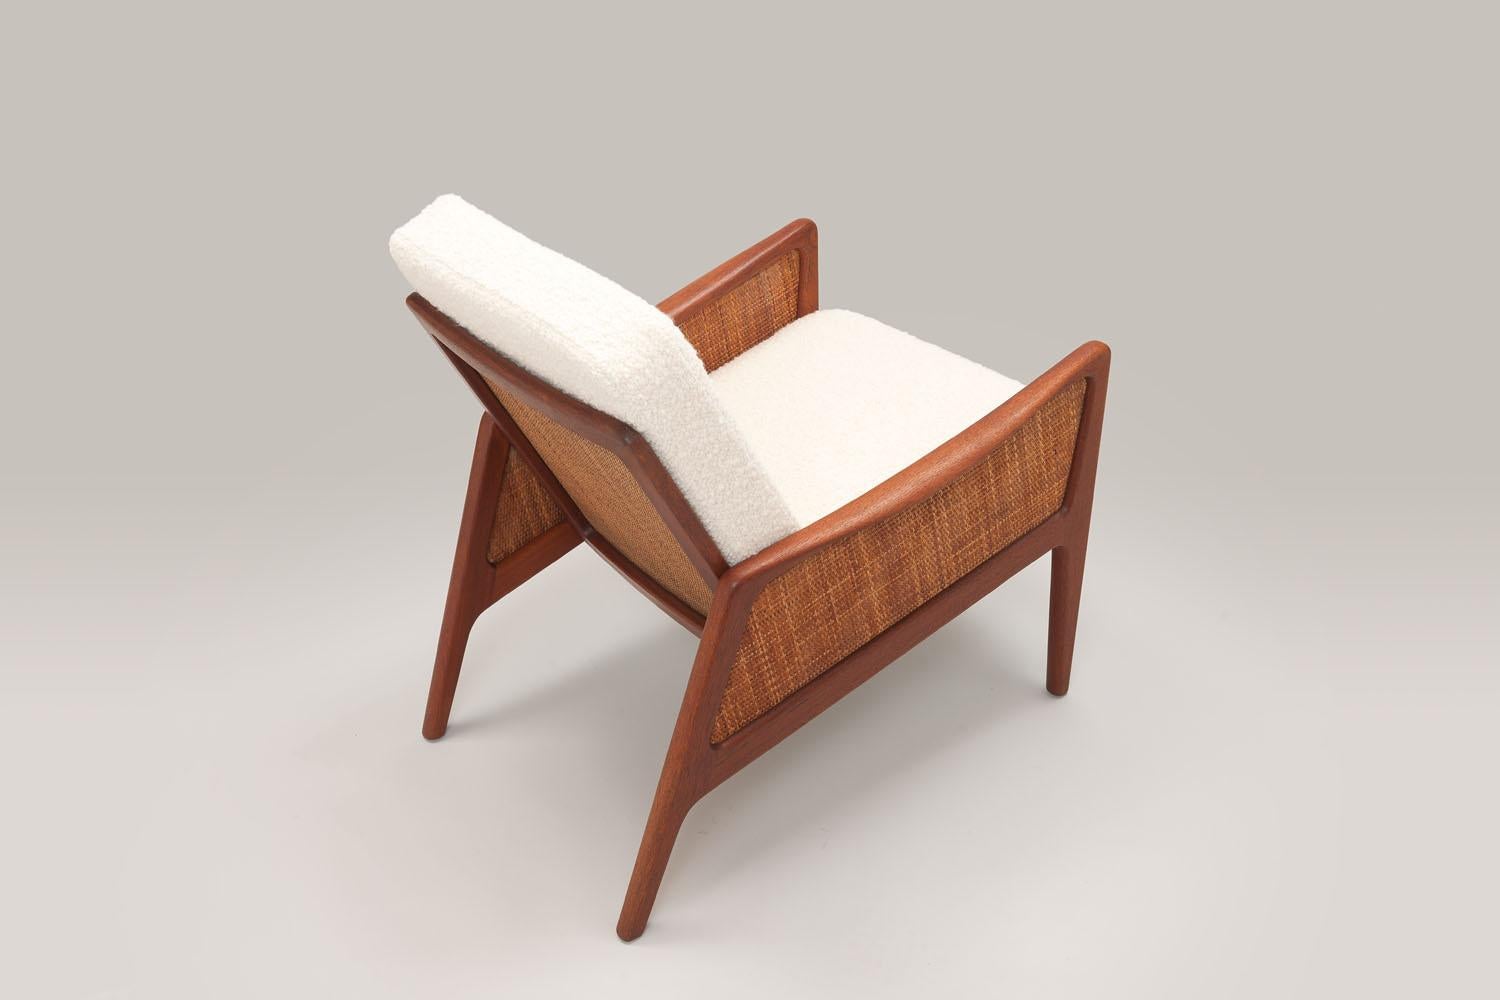 Scandinavian Modern Pair of Cane & Teak FD-151 Chairs by Peter Hvidt & Orla Mølgaard-Nielsen, 1956